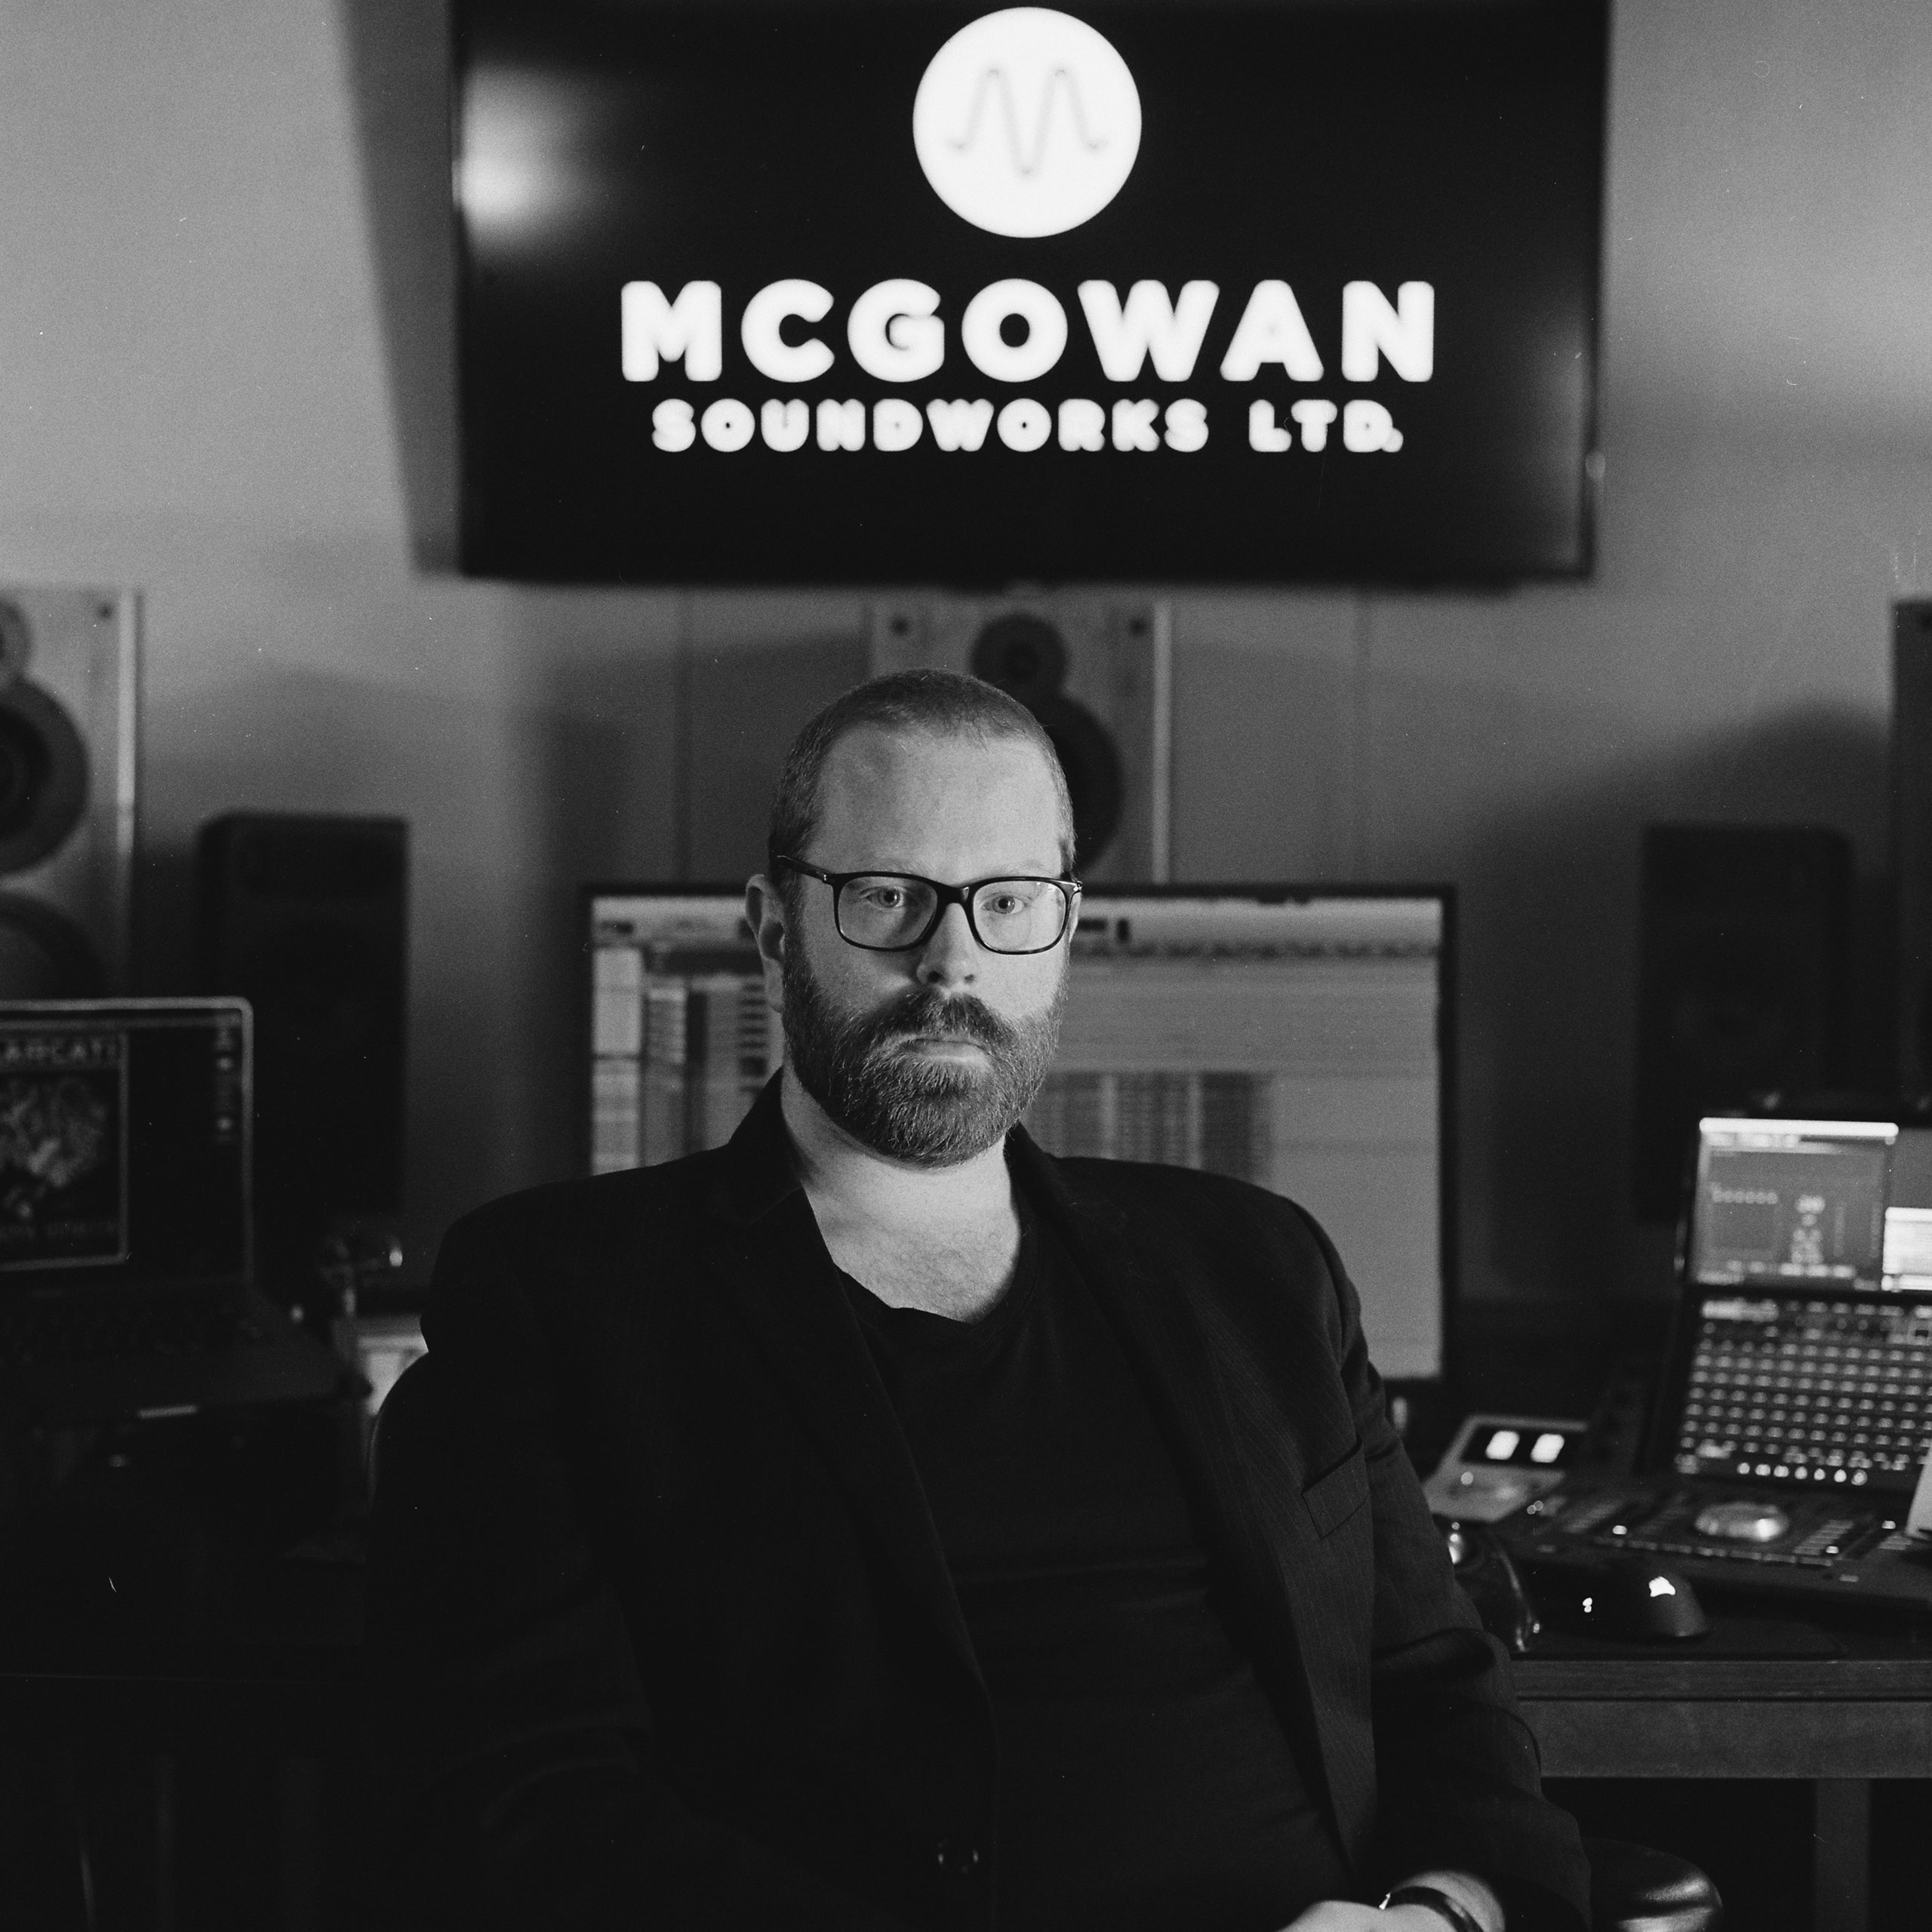 Phil McGowan of McGowan Soundworks LTD